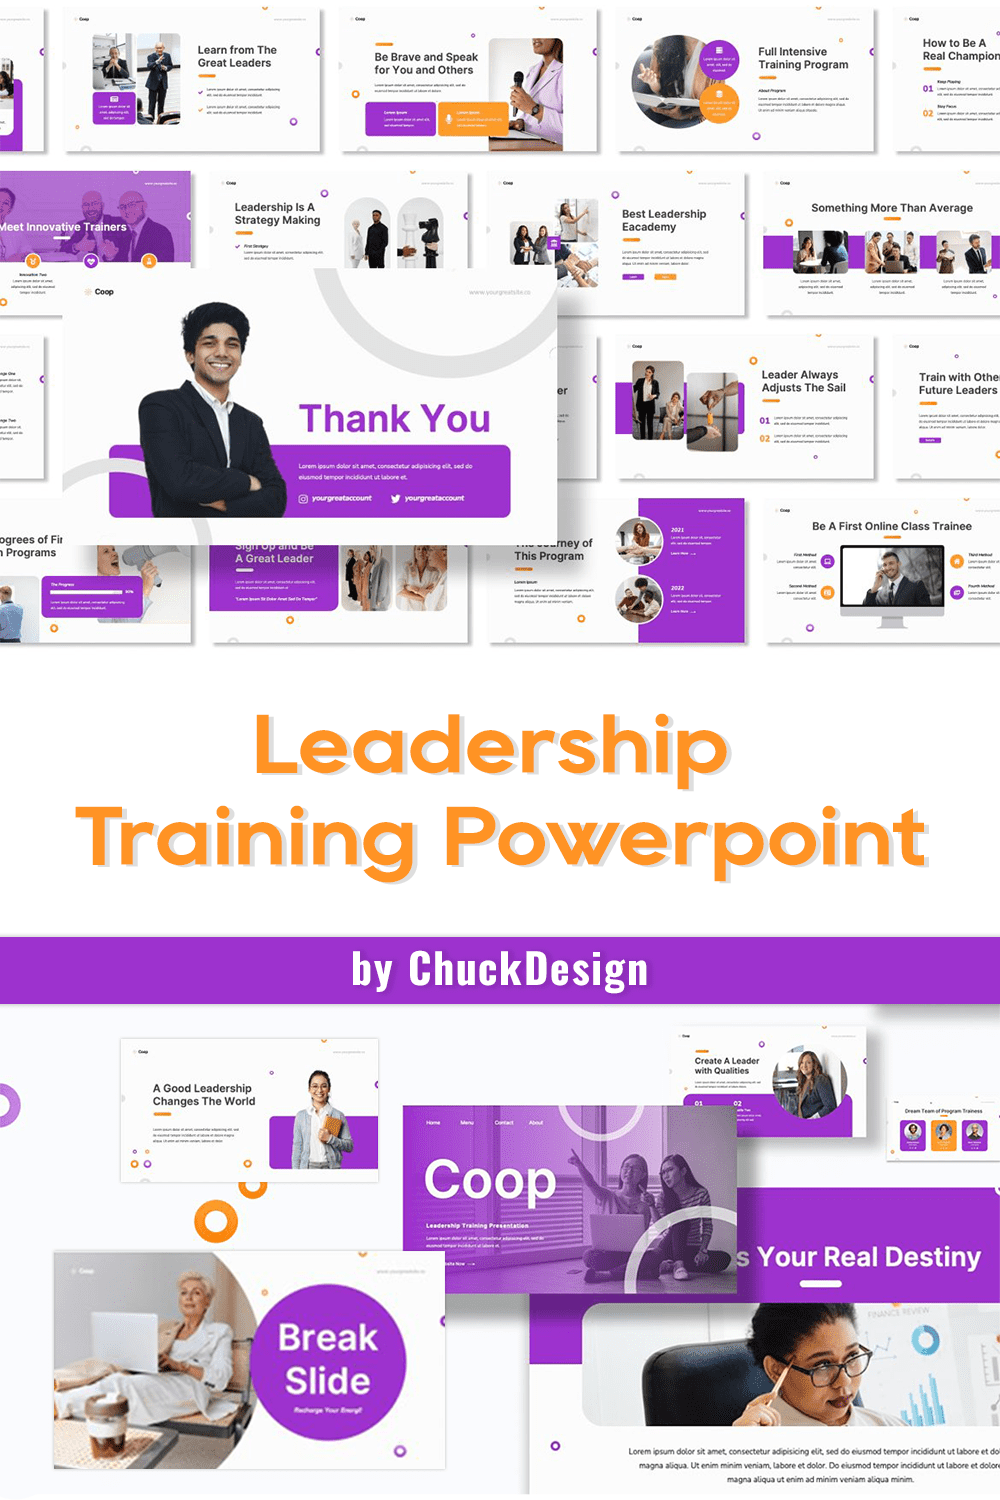 Leadership Training PowerPoint pinterest image.